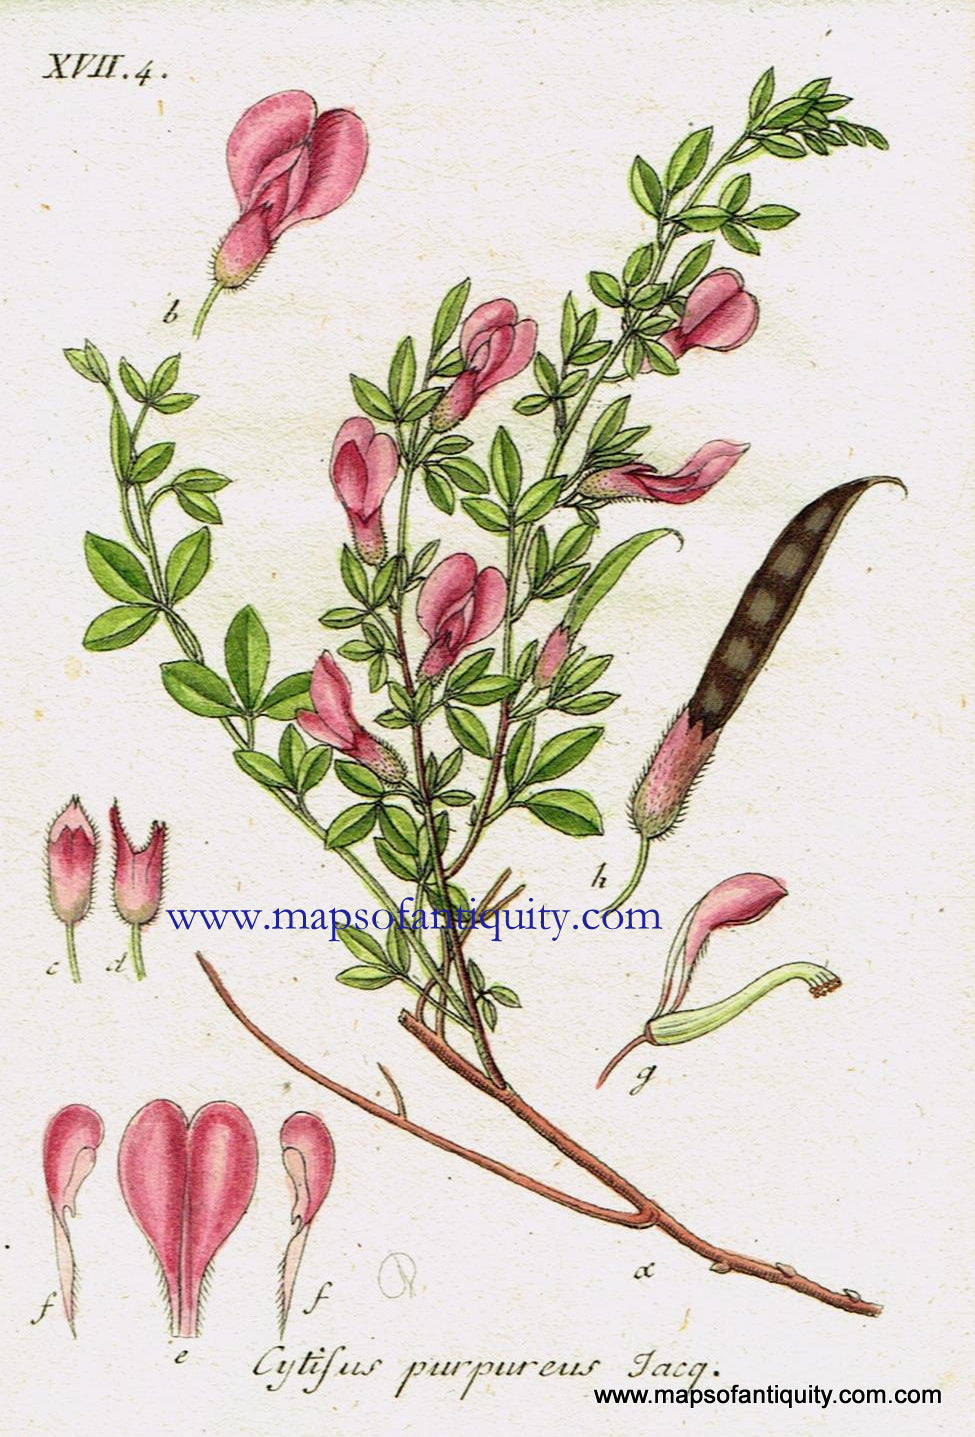 Antique-Hand-Colored-Botanical-Print-Cytifus-purpureus-Scop.-Or-purple-broom-Antique-Prints--Natural-History-Botanical-1808-Jacob-Sturm-Maps-Of-Antiquity